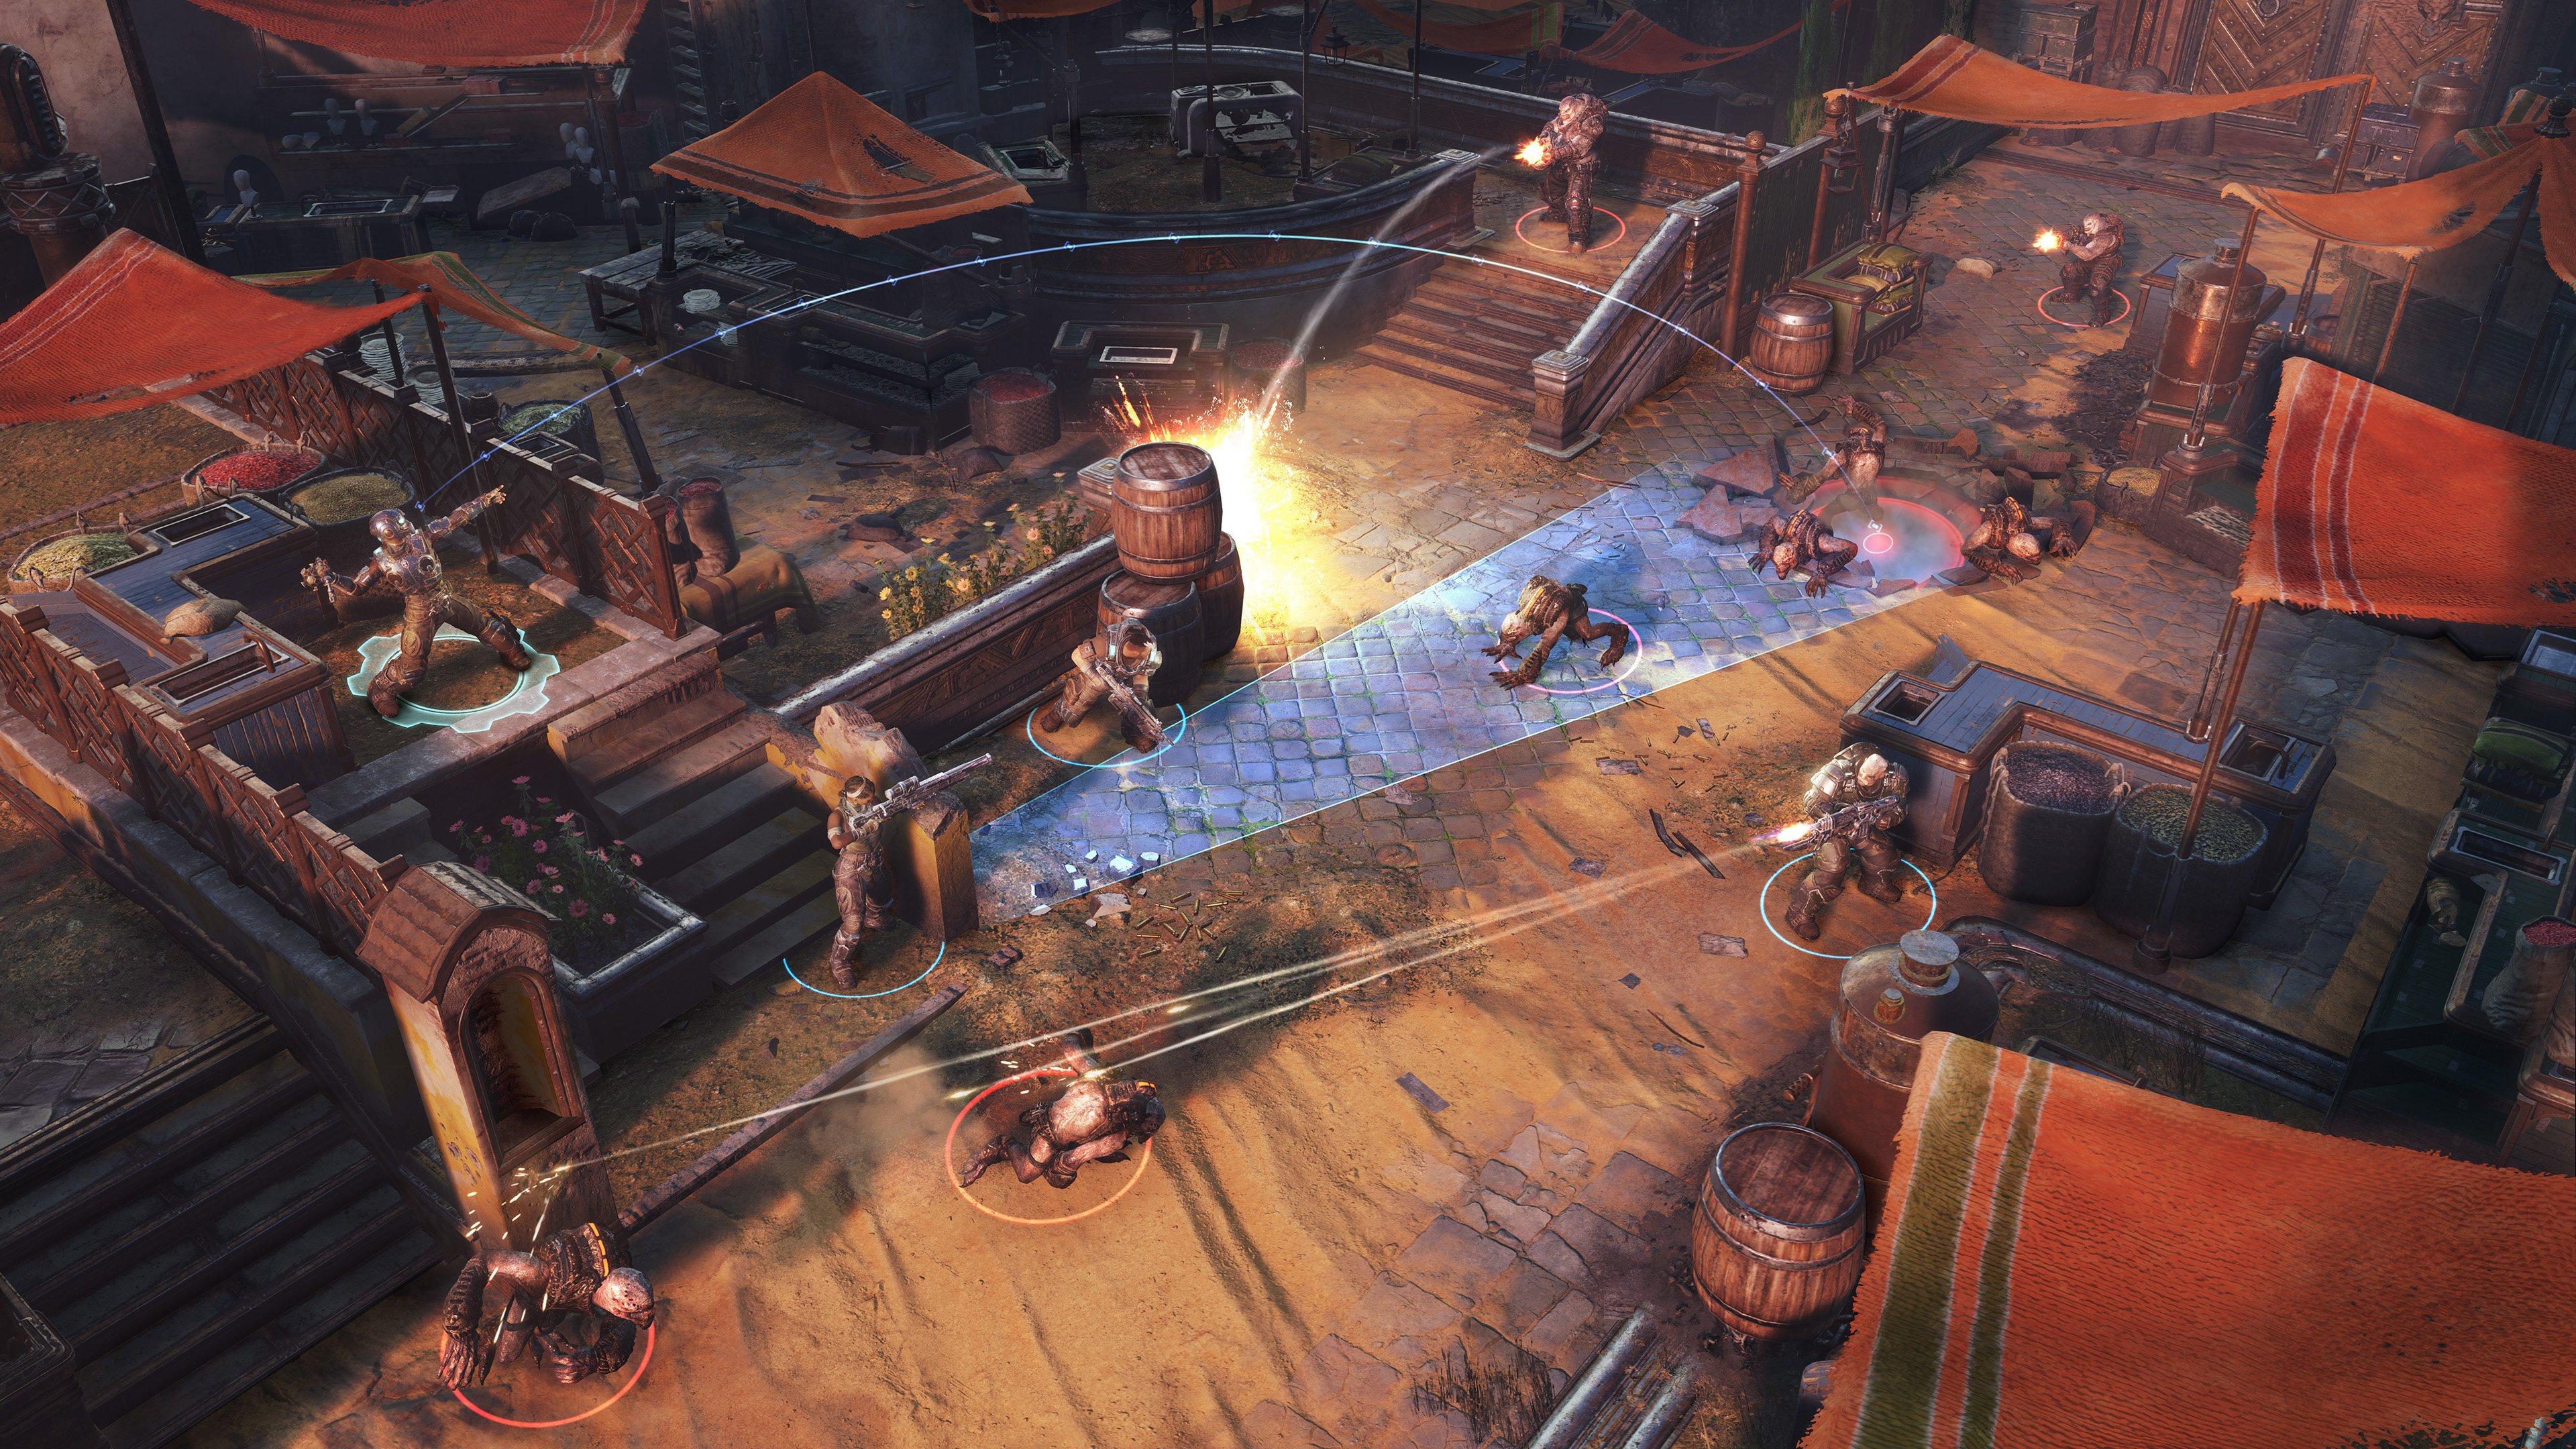 Gears Of War 3 on XOne — price history, screenshots, discounts • USA